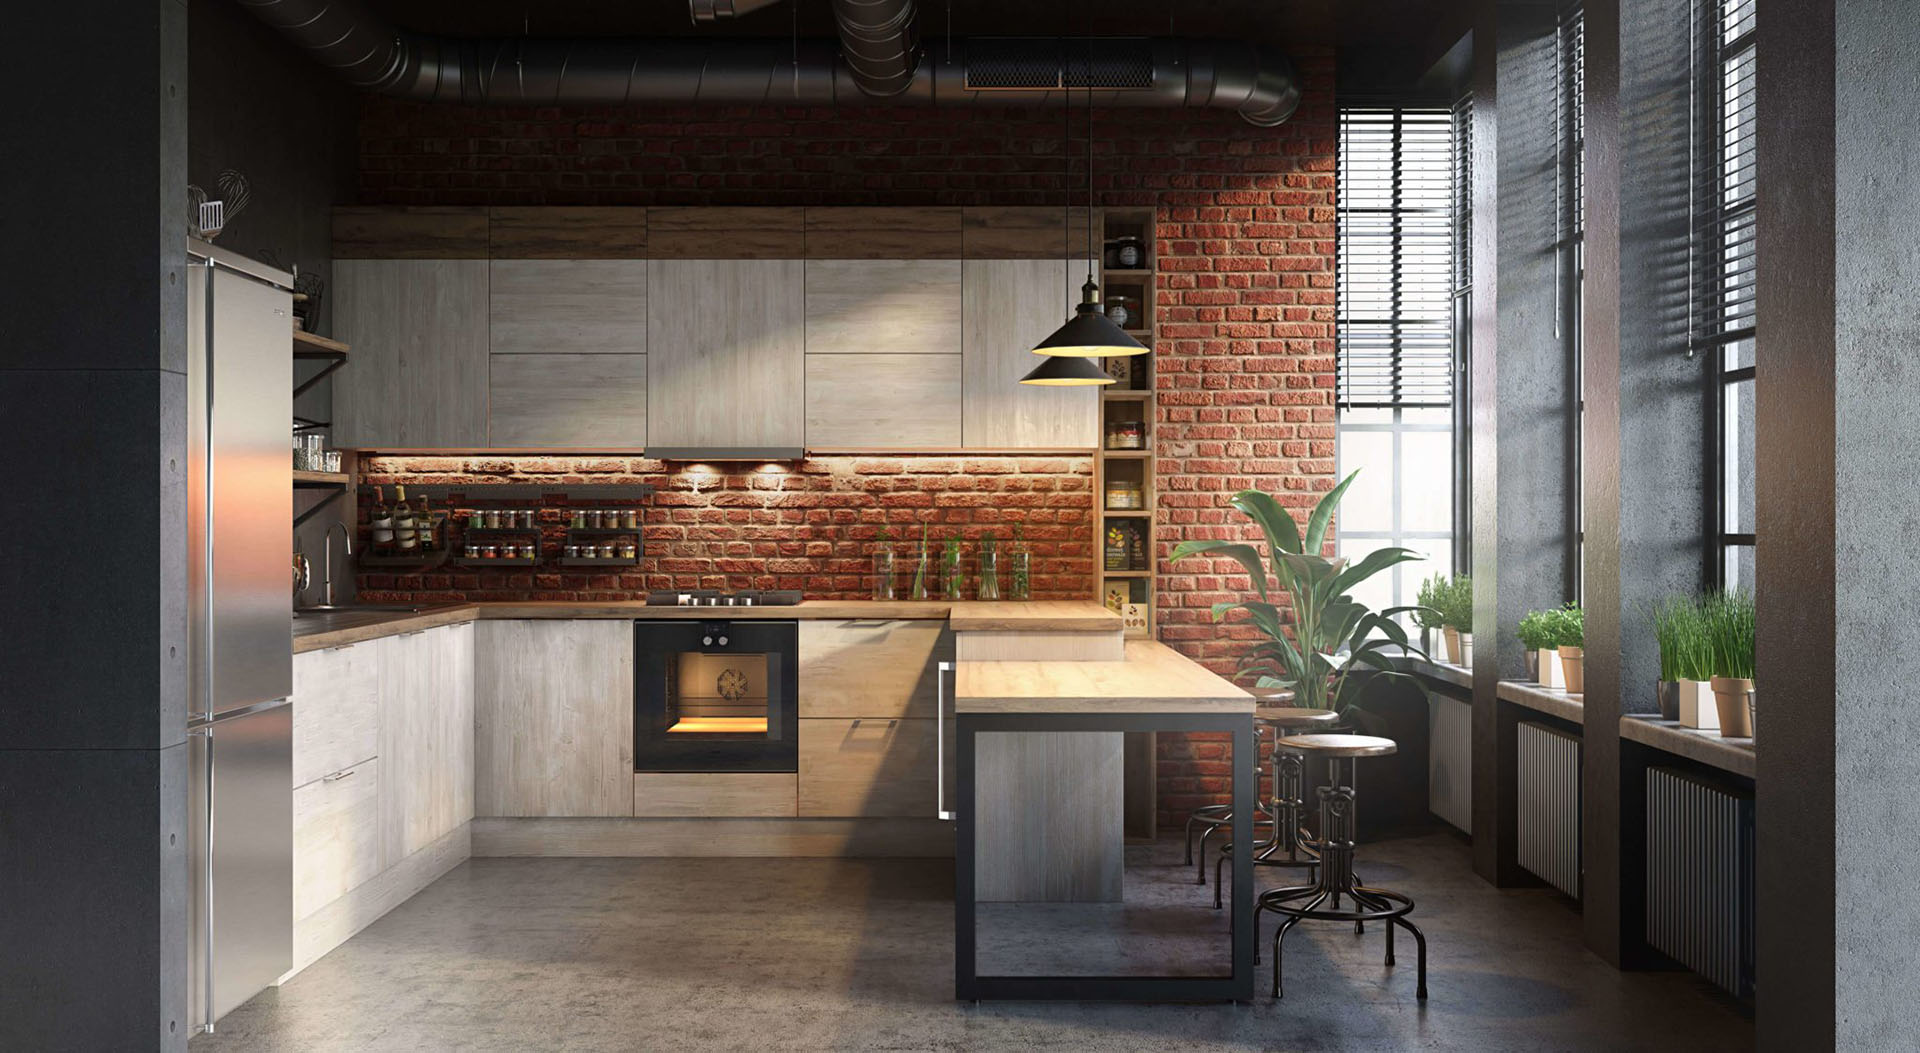 3D Interior Visualization of a Stylish Kitchen